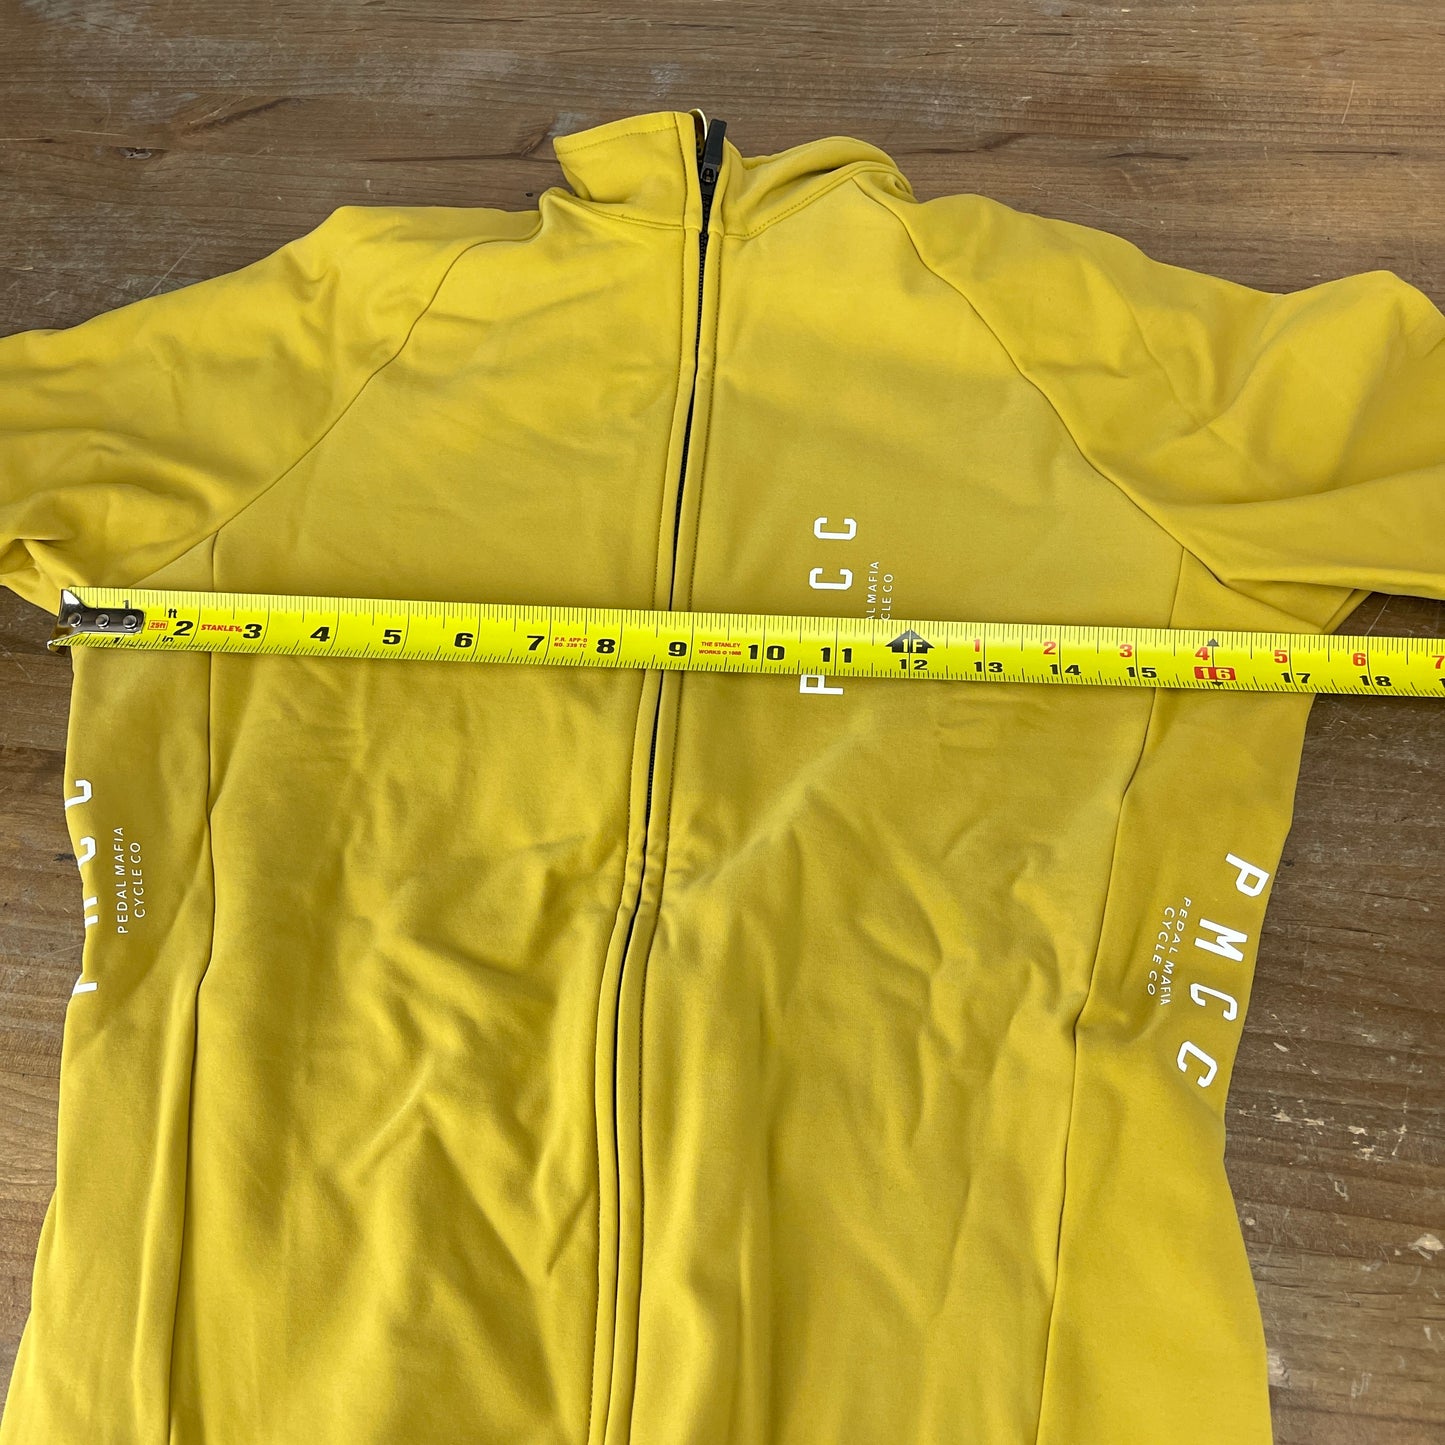 New! Pedal Mafia PMCC Thermal Long Sleeve Men's Small Cycling Jacket Wasabi